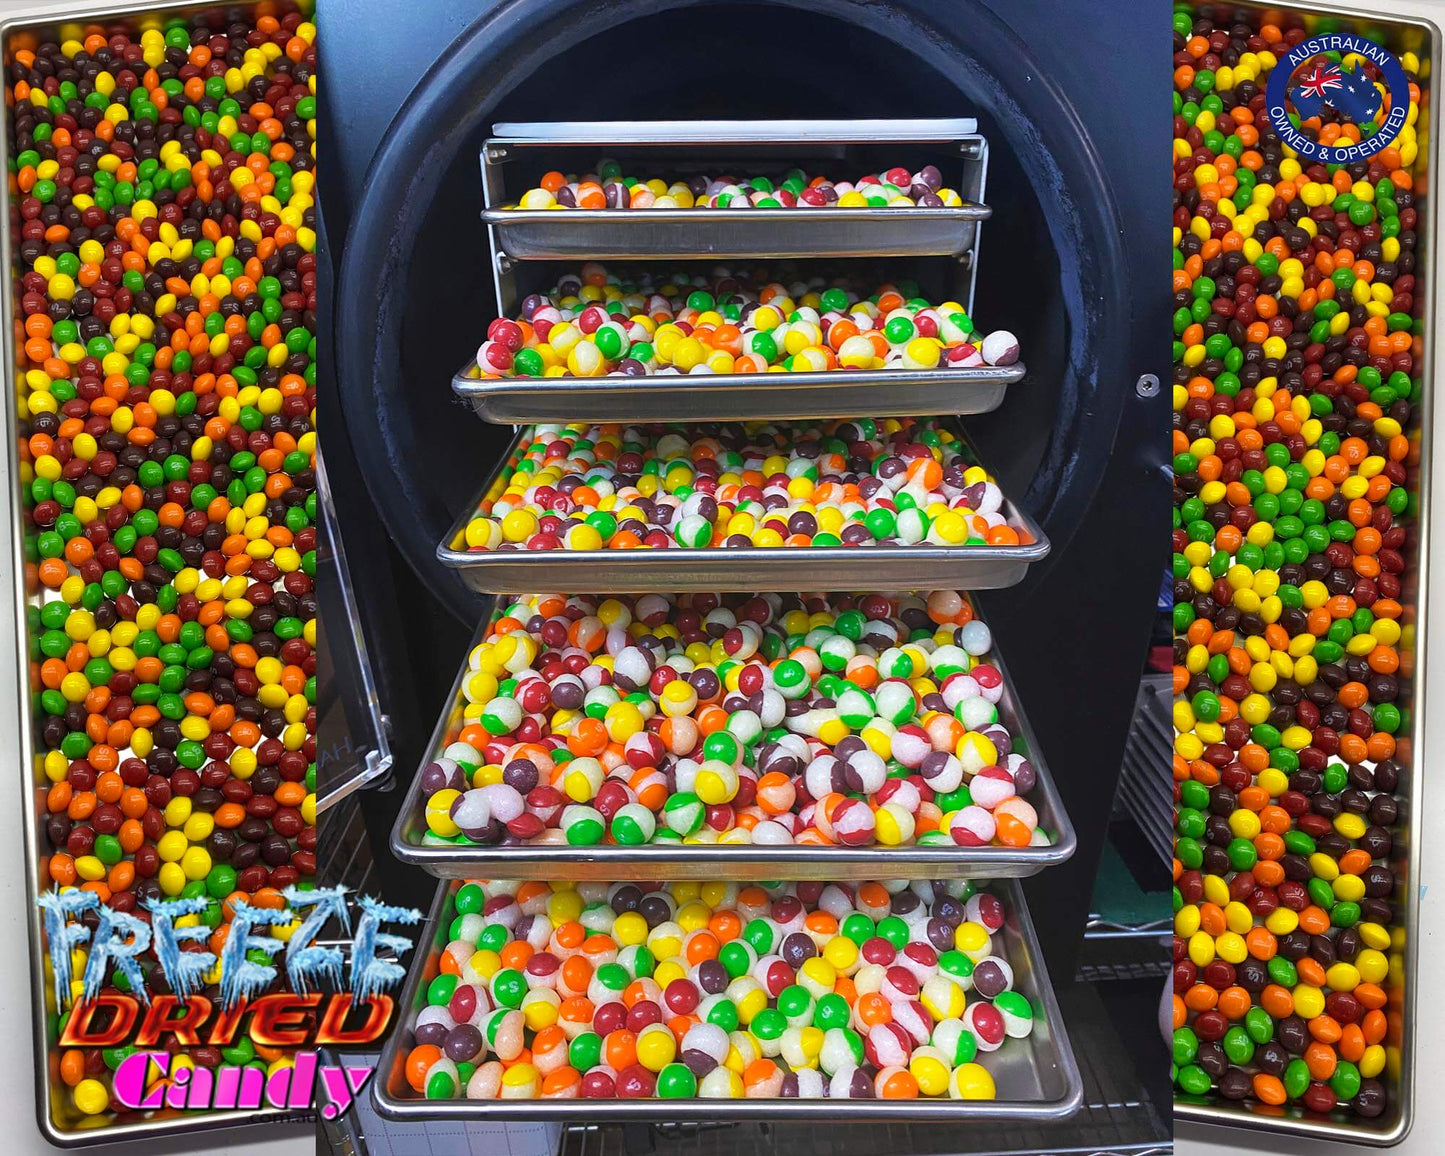 Freeze Dried Candy - Skittles - Australia